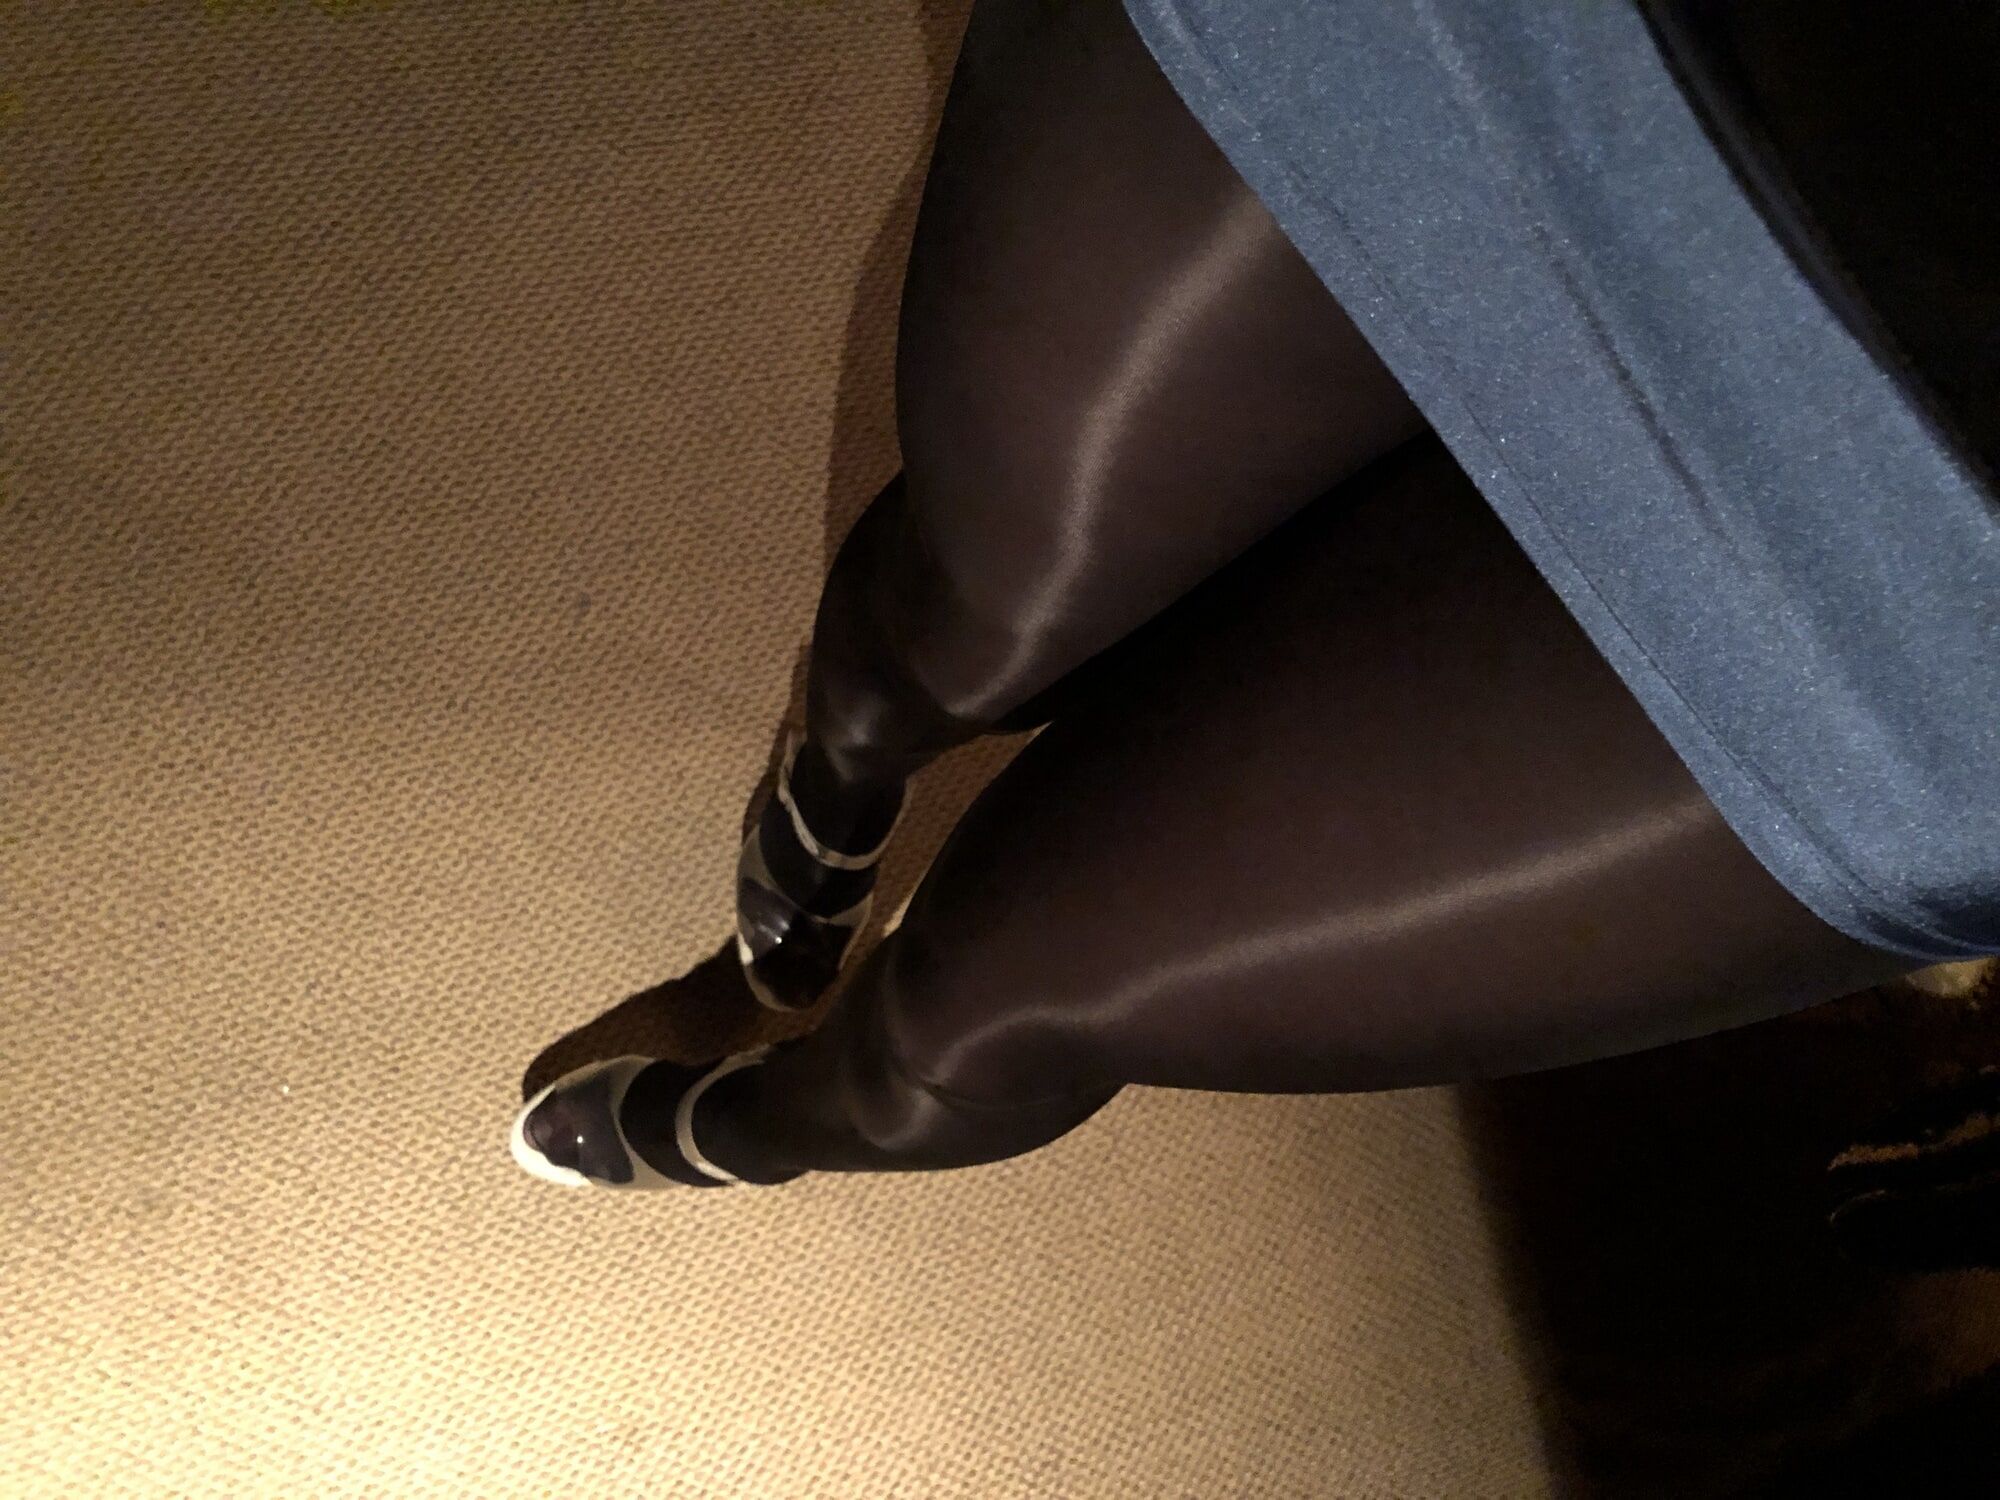 My legs on shiny pantyhose! #27